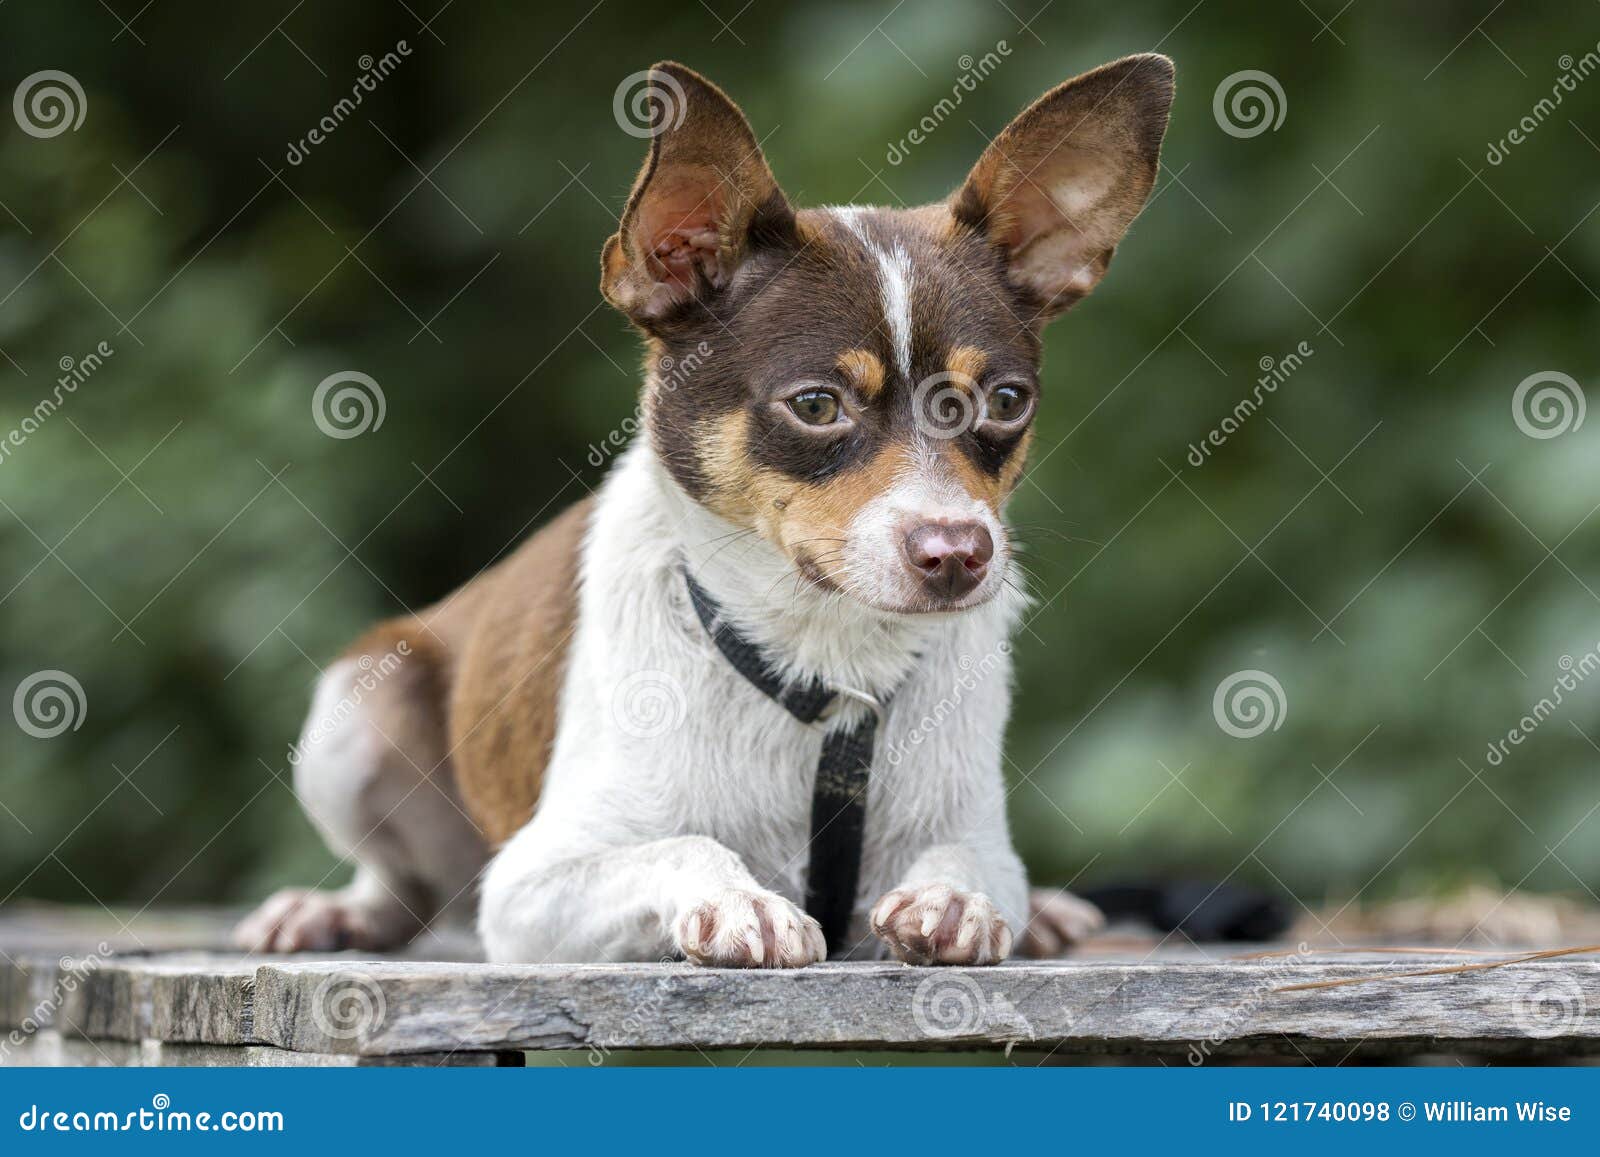 Tiny Chihuahua Rat Terrier Mixed Breed Dog Pet Adoption Photo Stock Photo Image Of Chocolate Animal 121740098